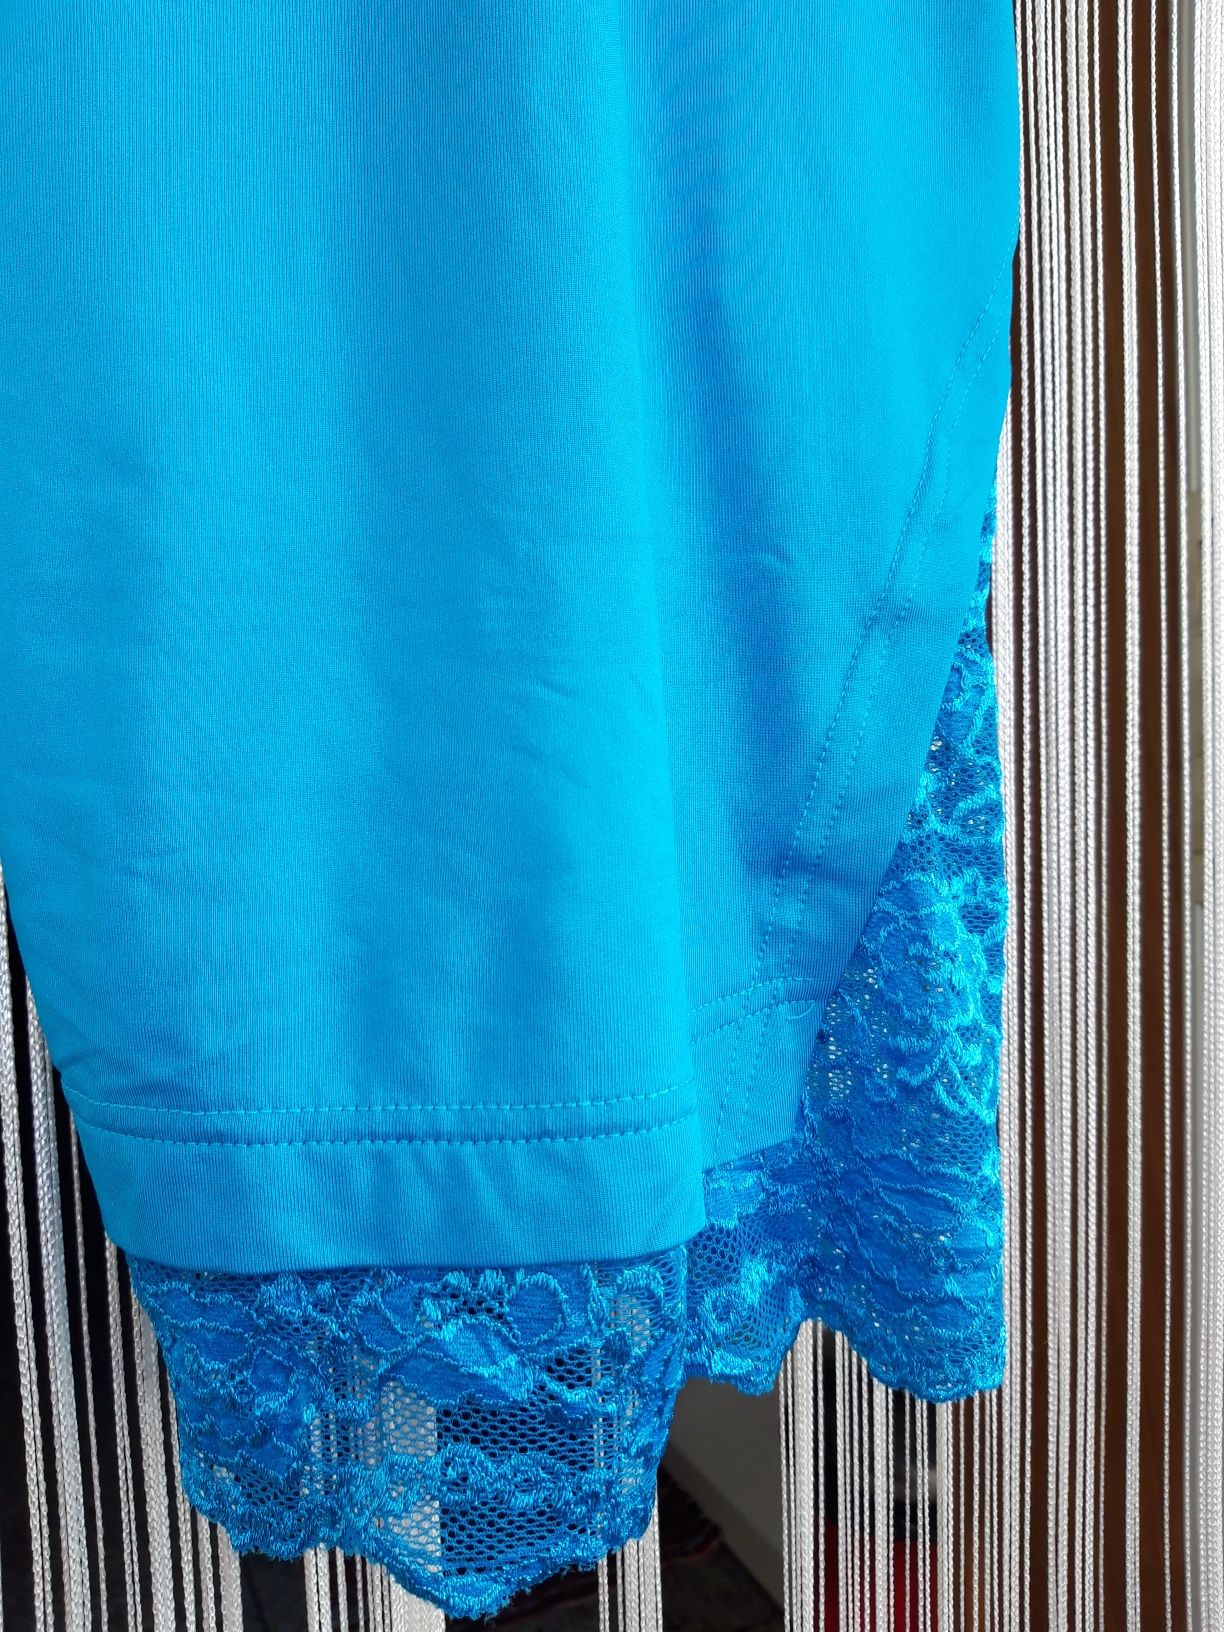 Camisa de noite (vestido) de cor azul, debruada a renda (S) - NOVA!